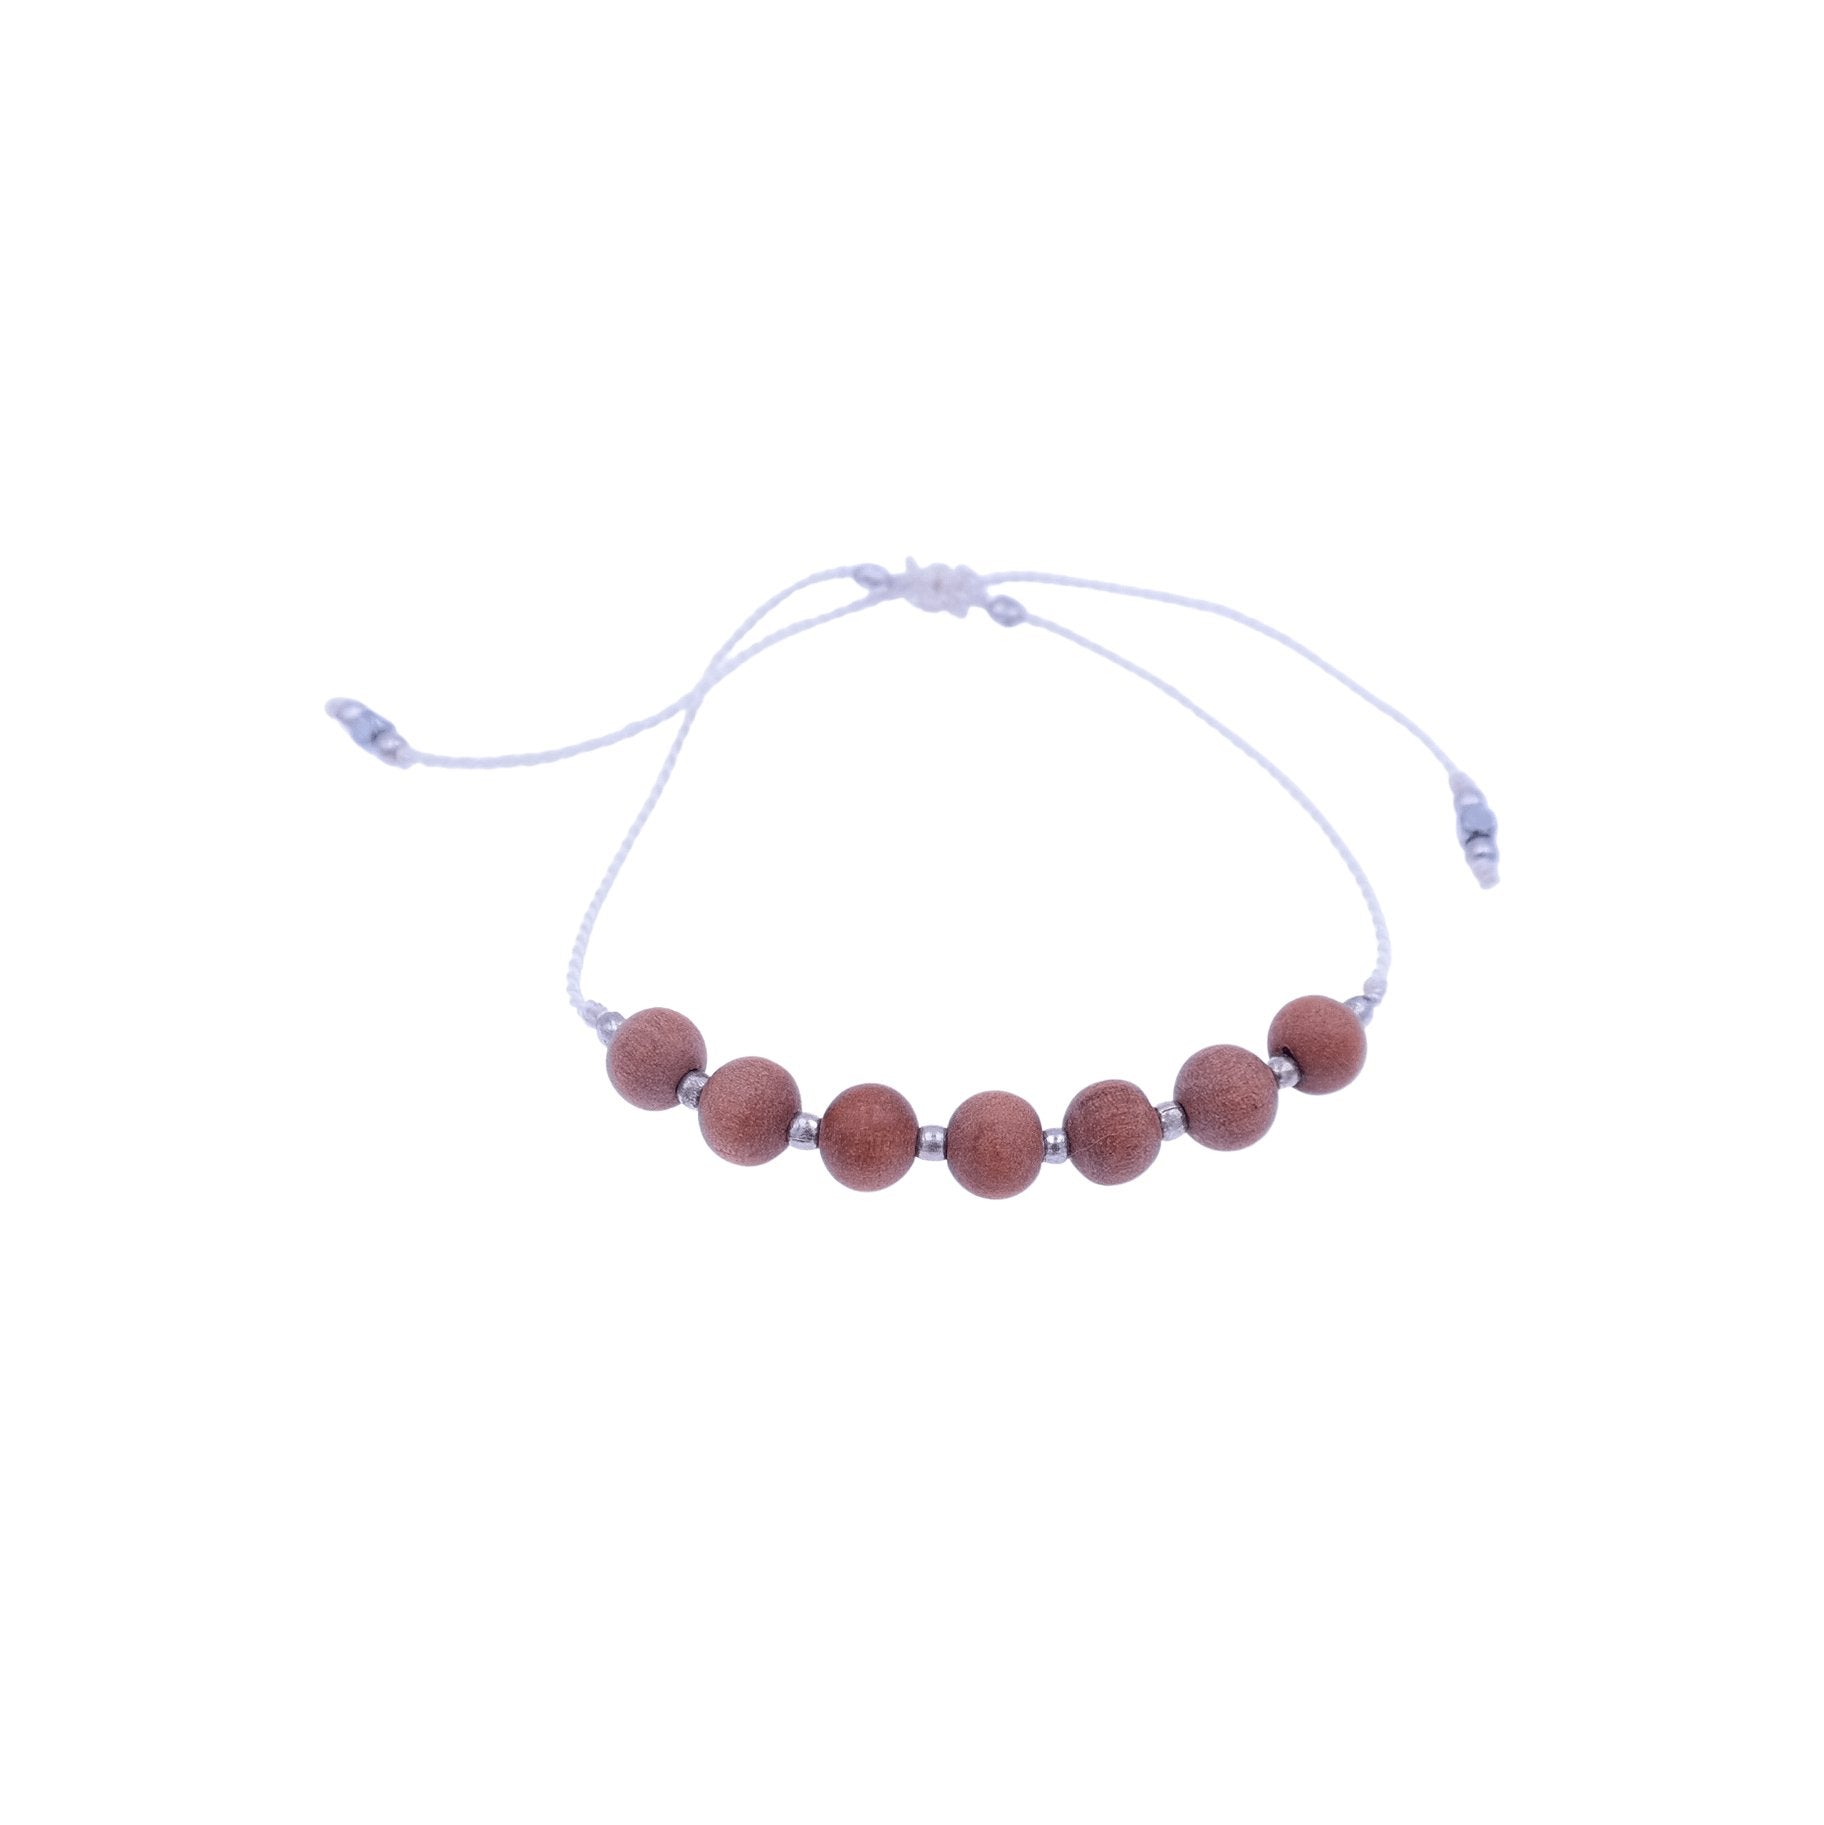 Adjustable Harmony Bracelet - Sandalwood or Howlite - Gypsy Soul Jewellery